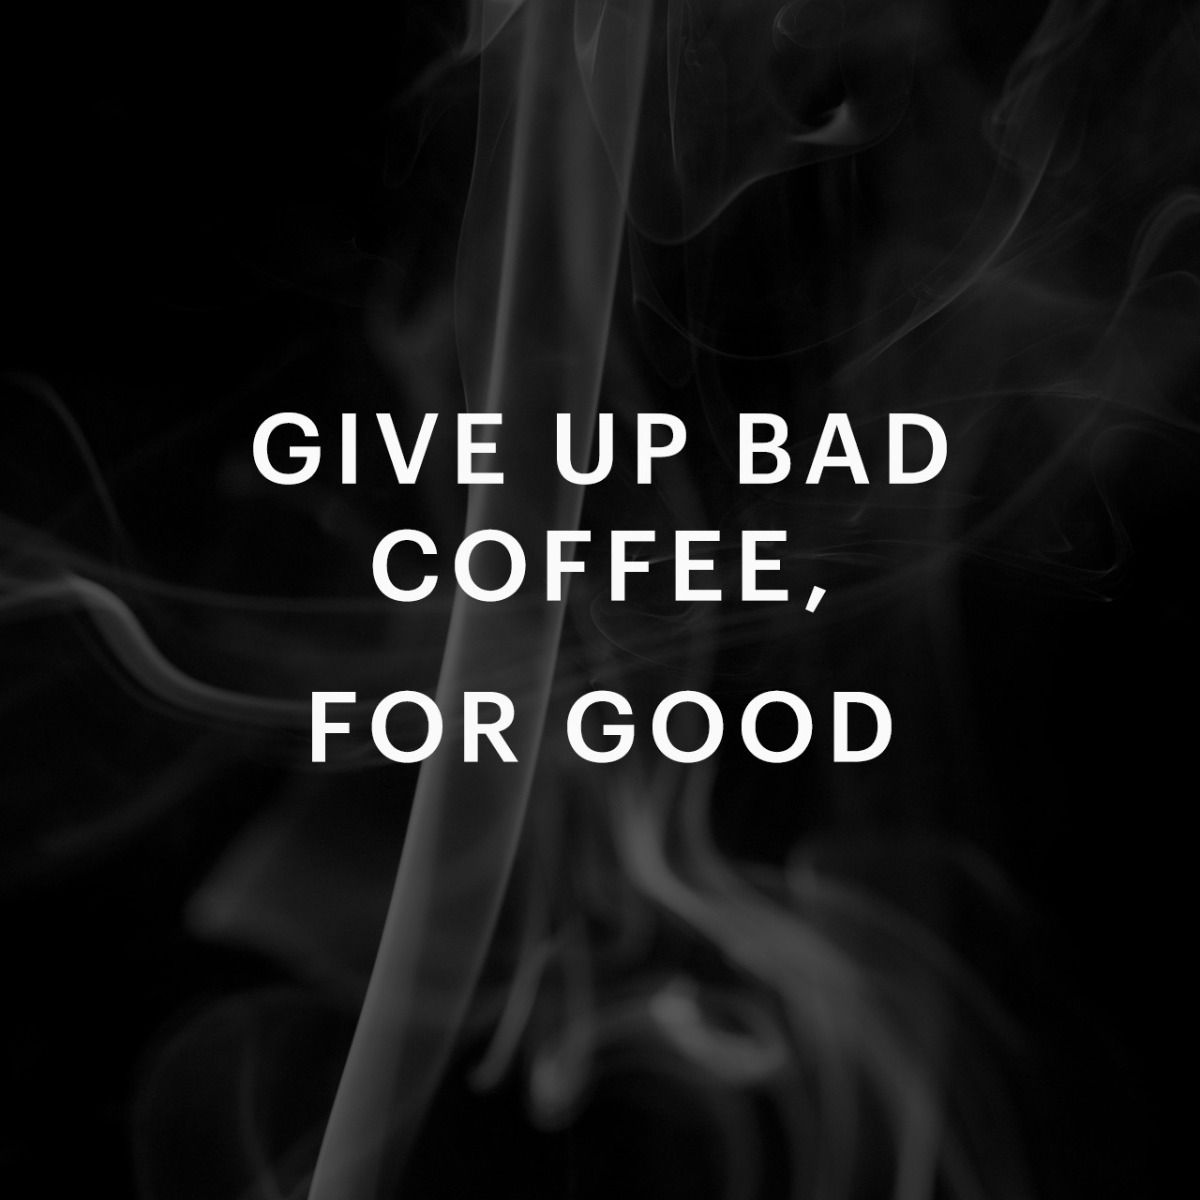 Bodum Chambord Coffee Maker en acier inoxydable 0,5 L, 4 tasses